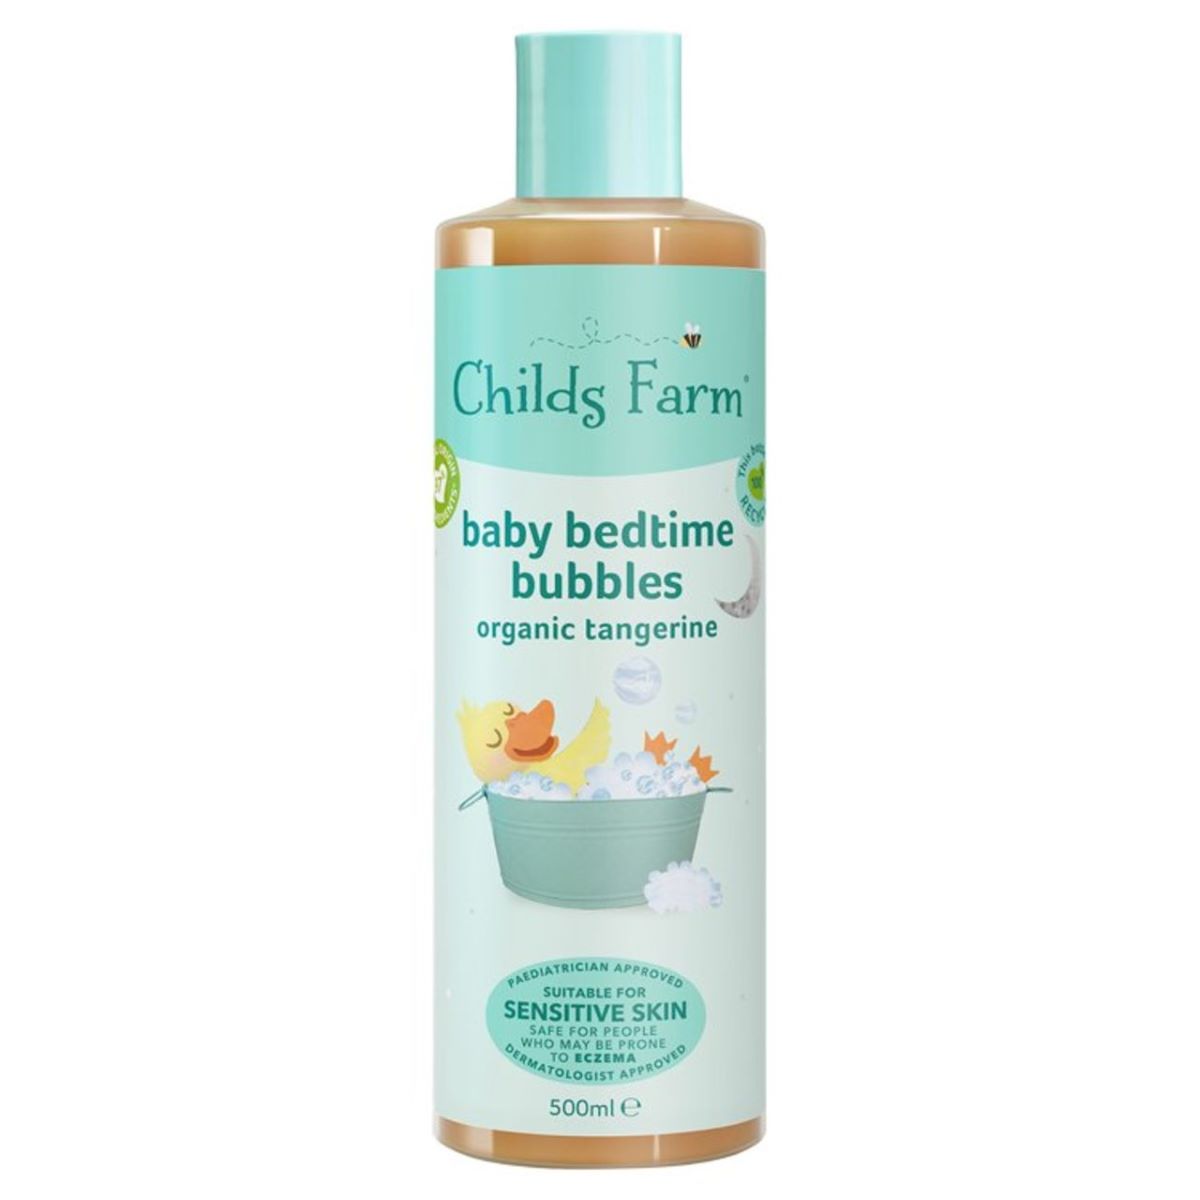 Childs Farm Organic Tangerine Baby Bedtime Bubbles